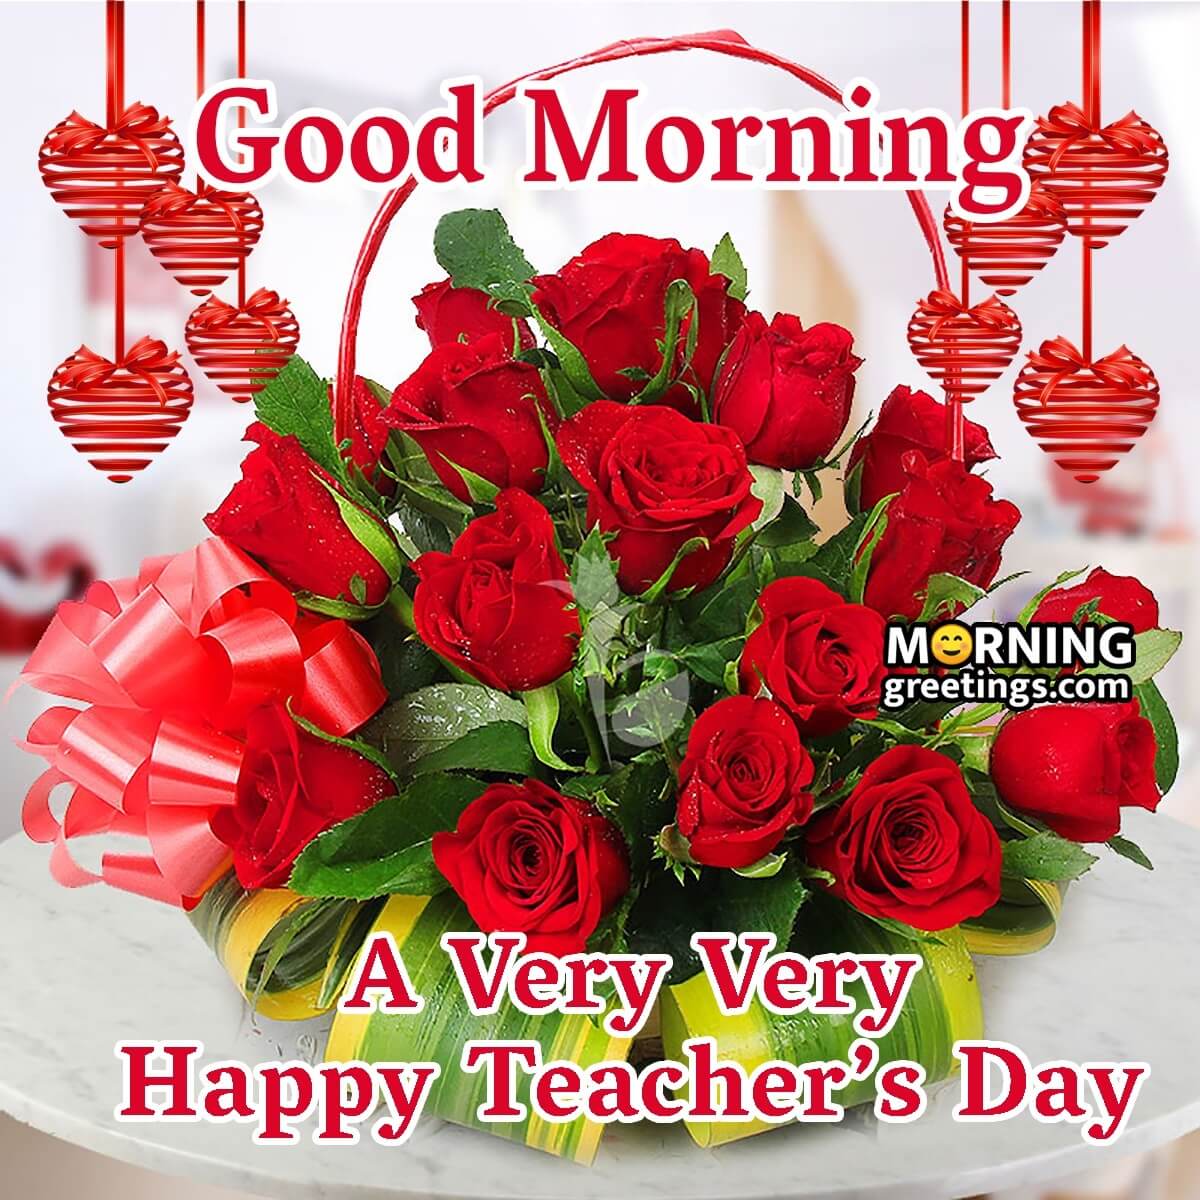 Good Morning A Very Very Happy Teachers Day